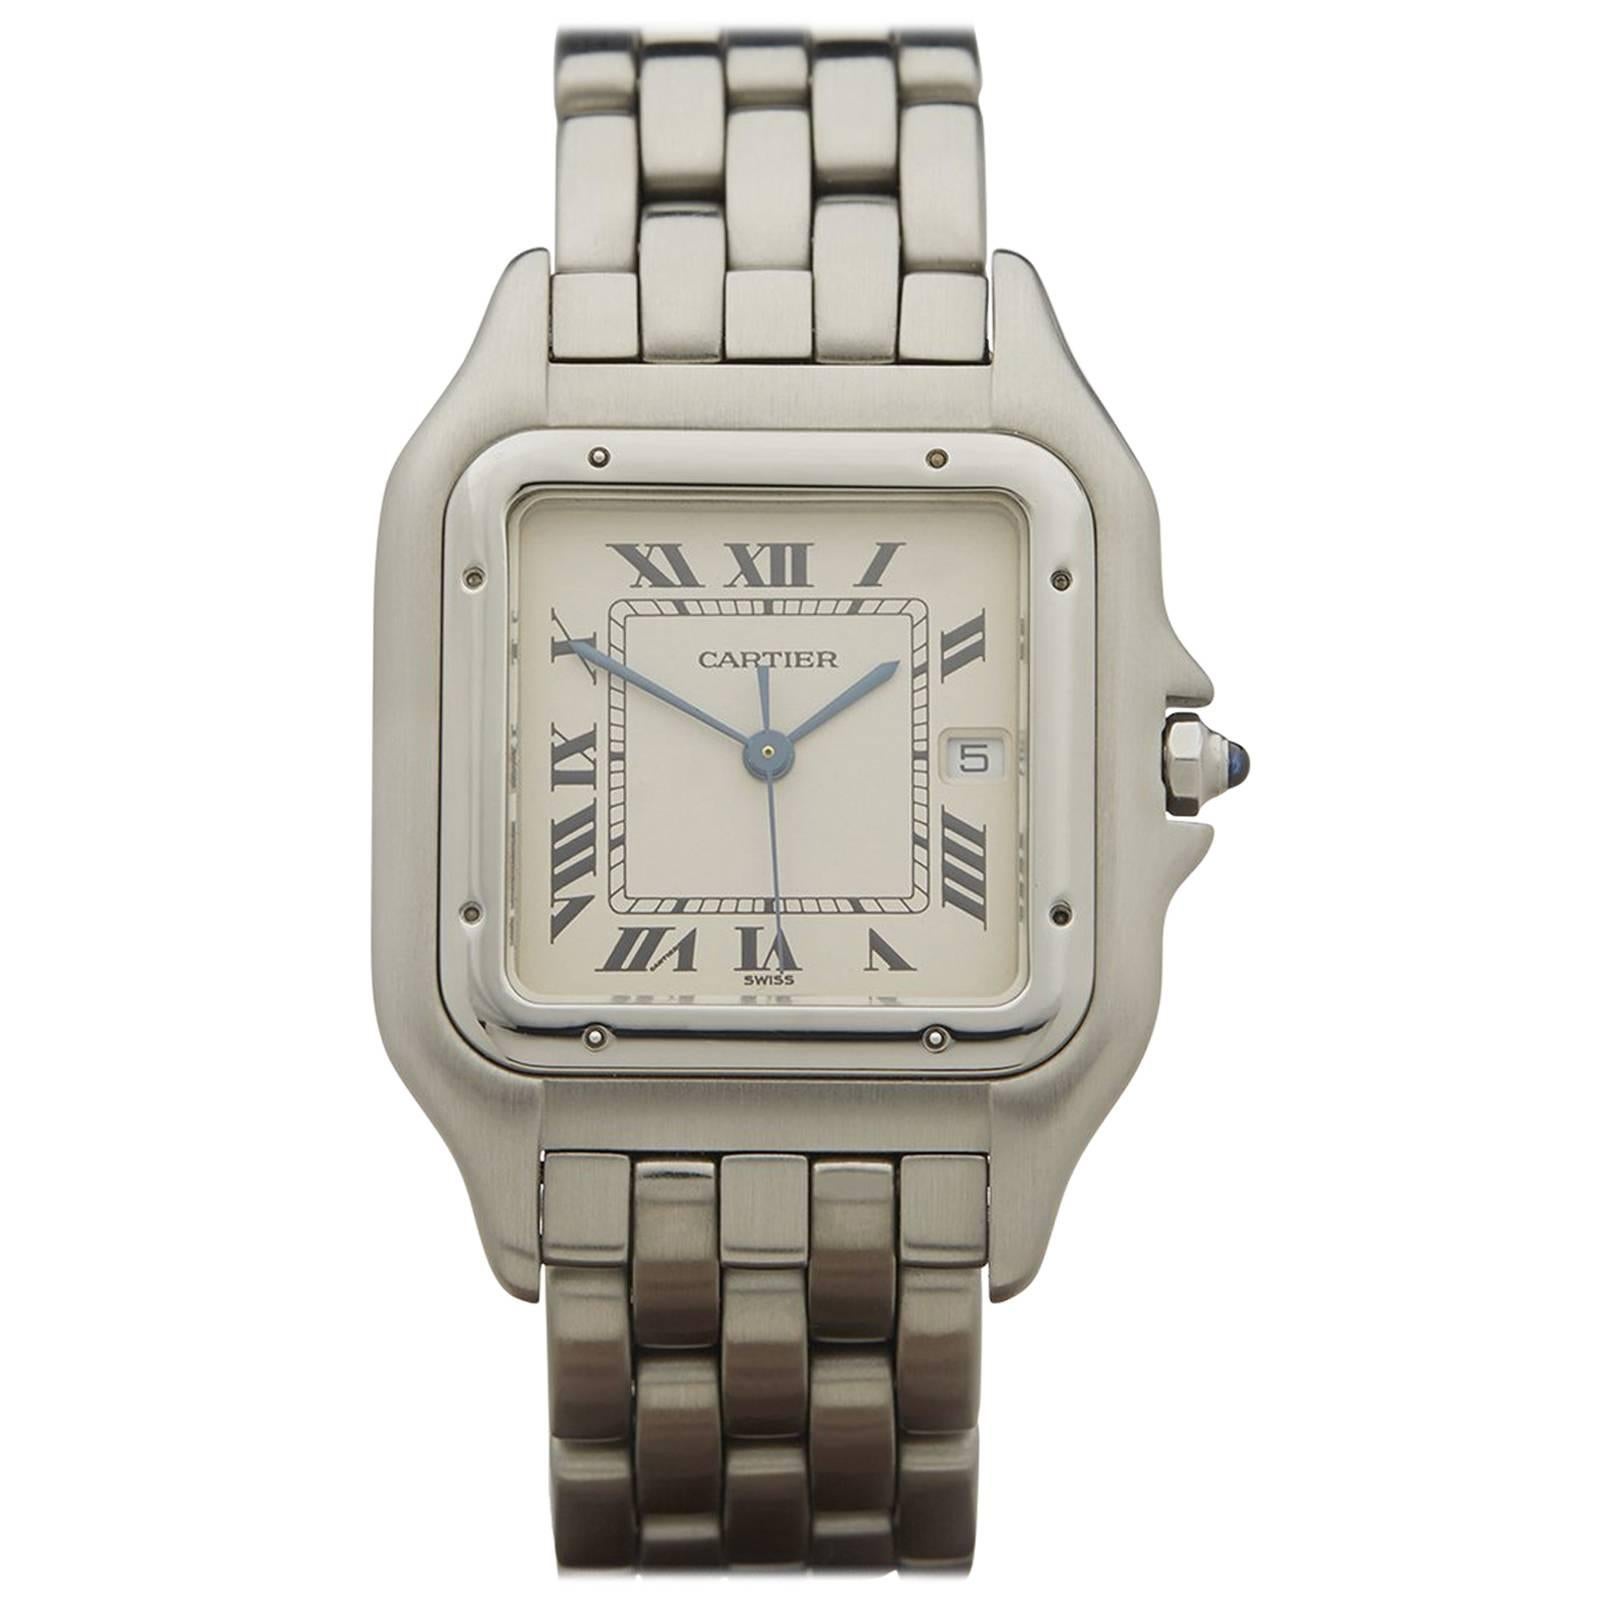  Cartier Stainless Steel White Dial Quartz Wristwatch 1300 2000s